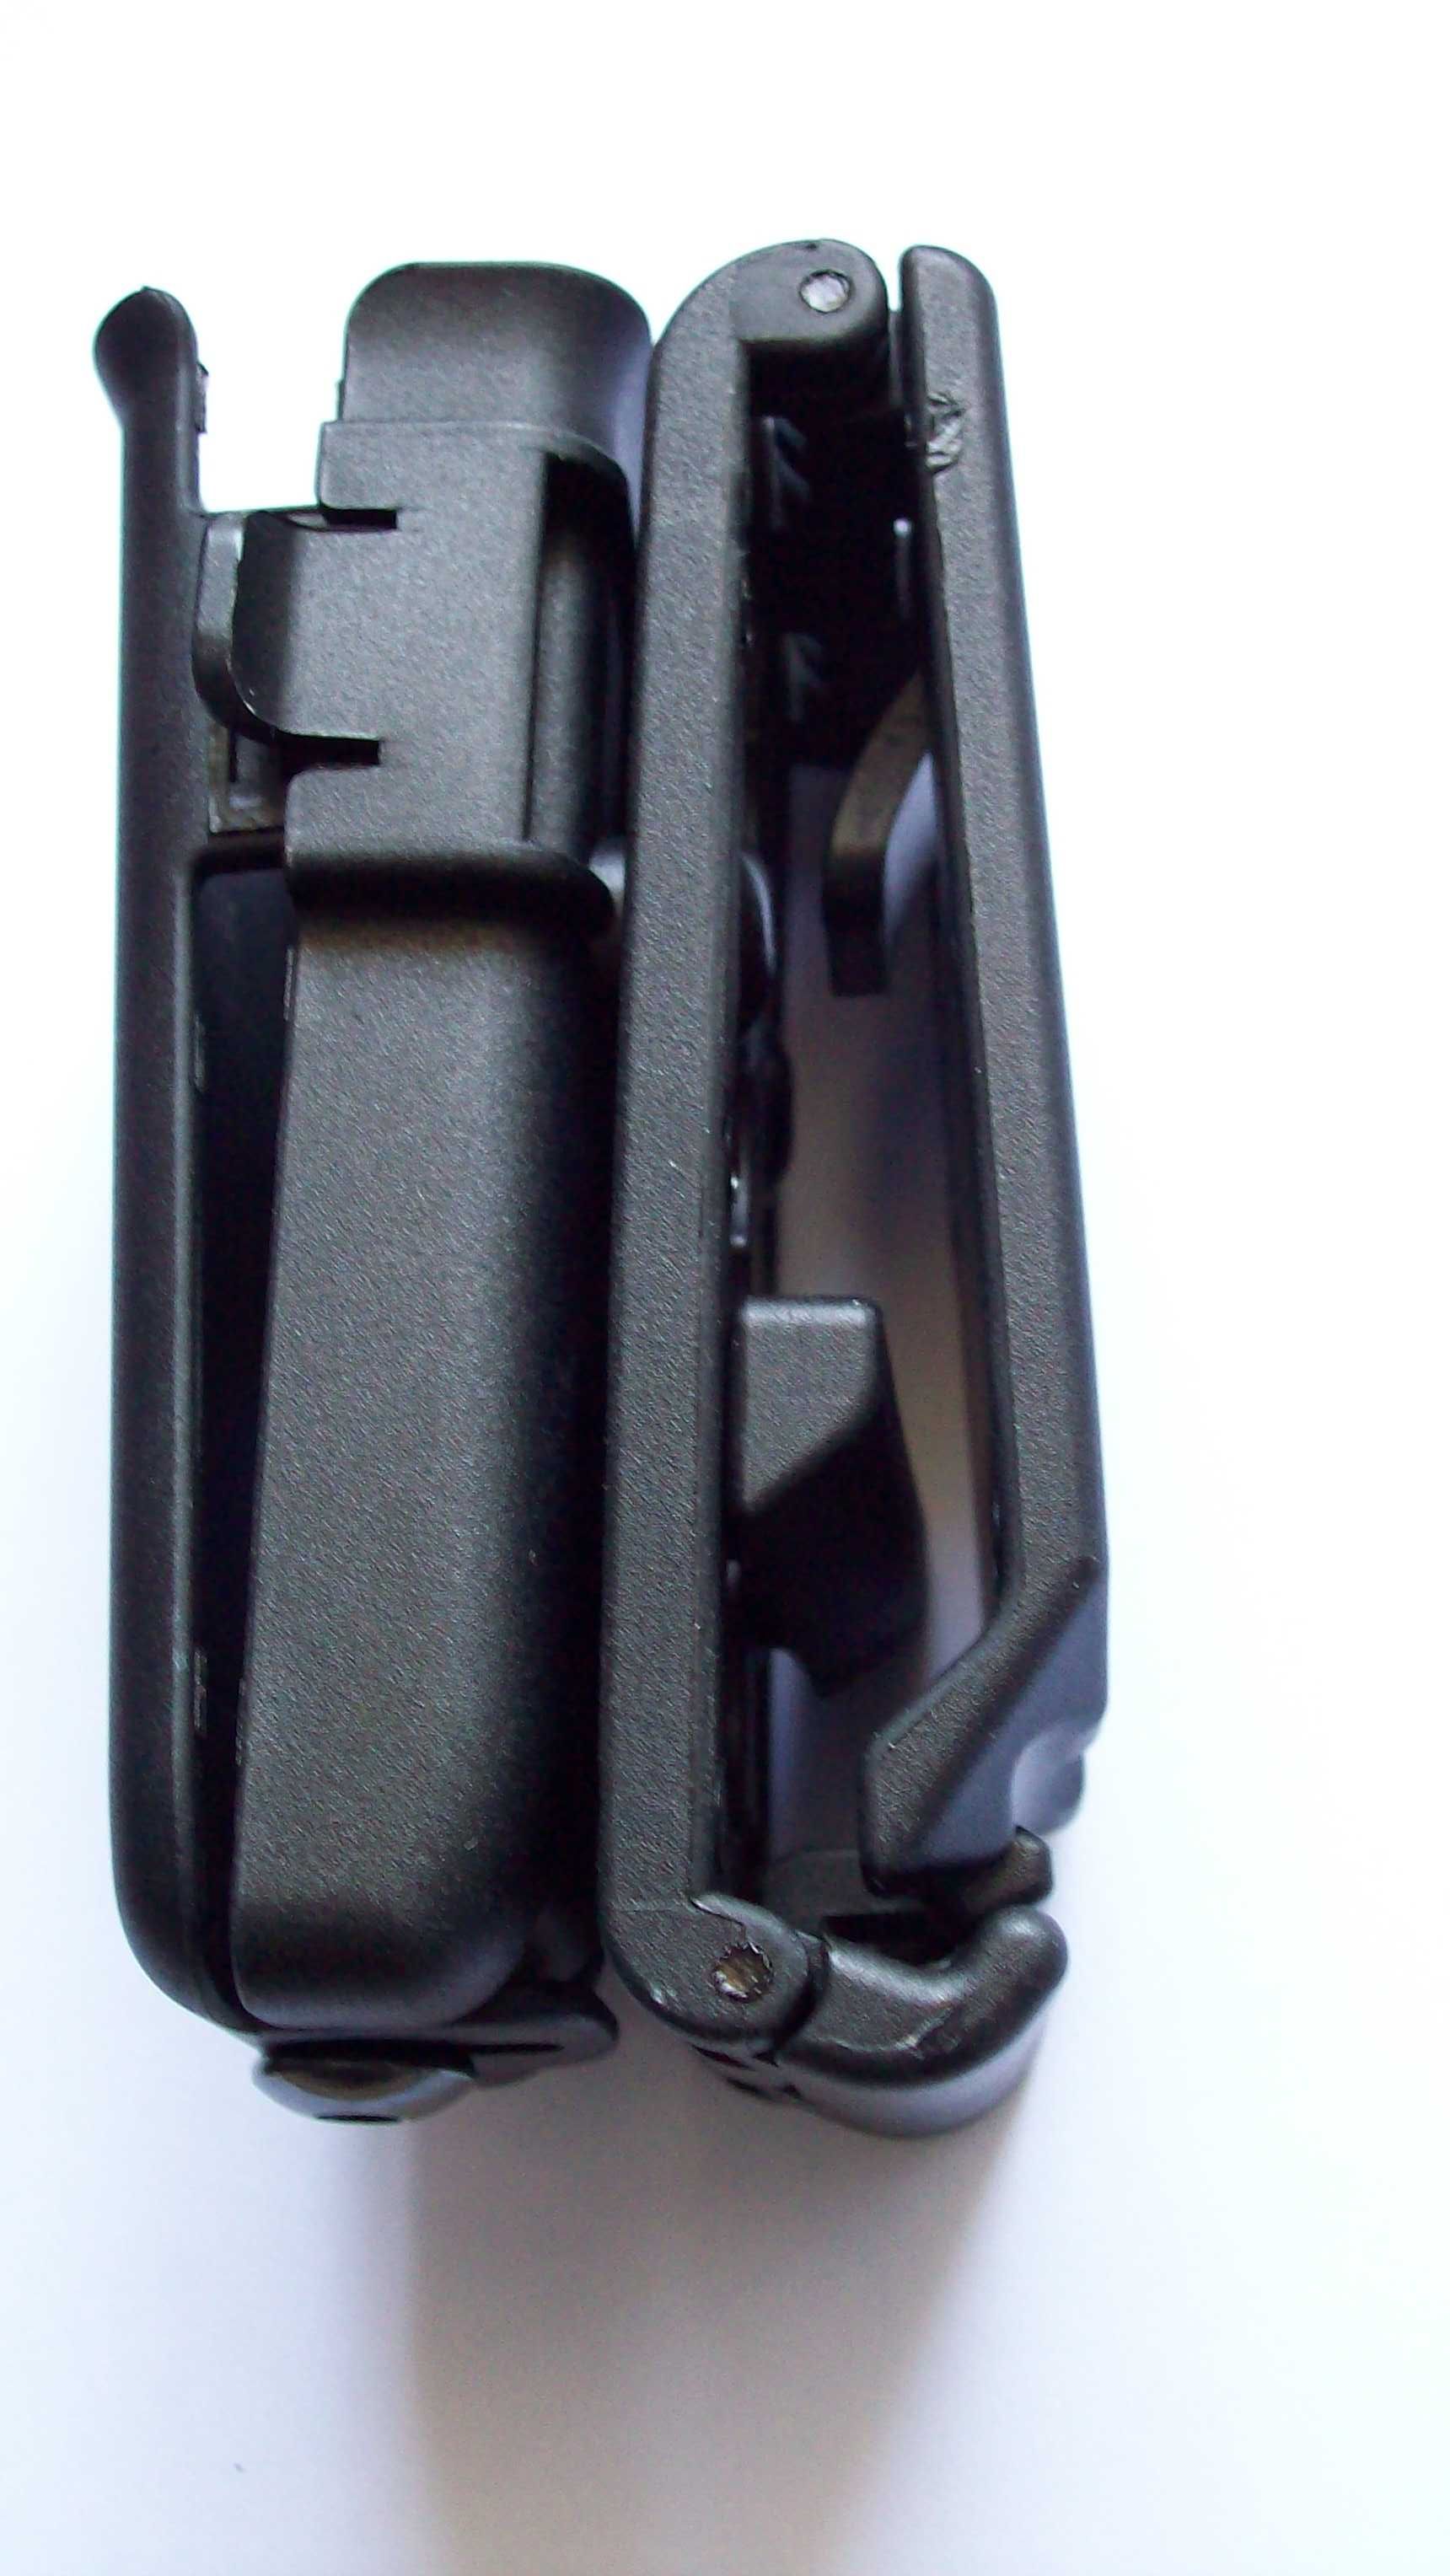 Regulowana ładownica na magazynki 1911/M92/Glock 17/P226/USP